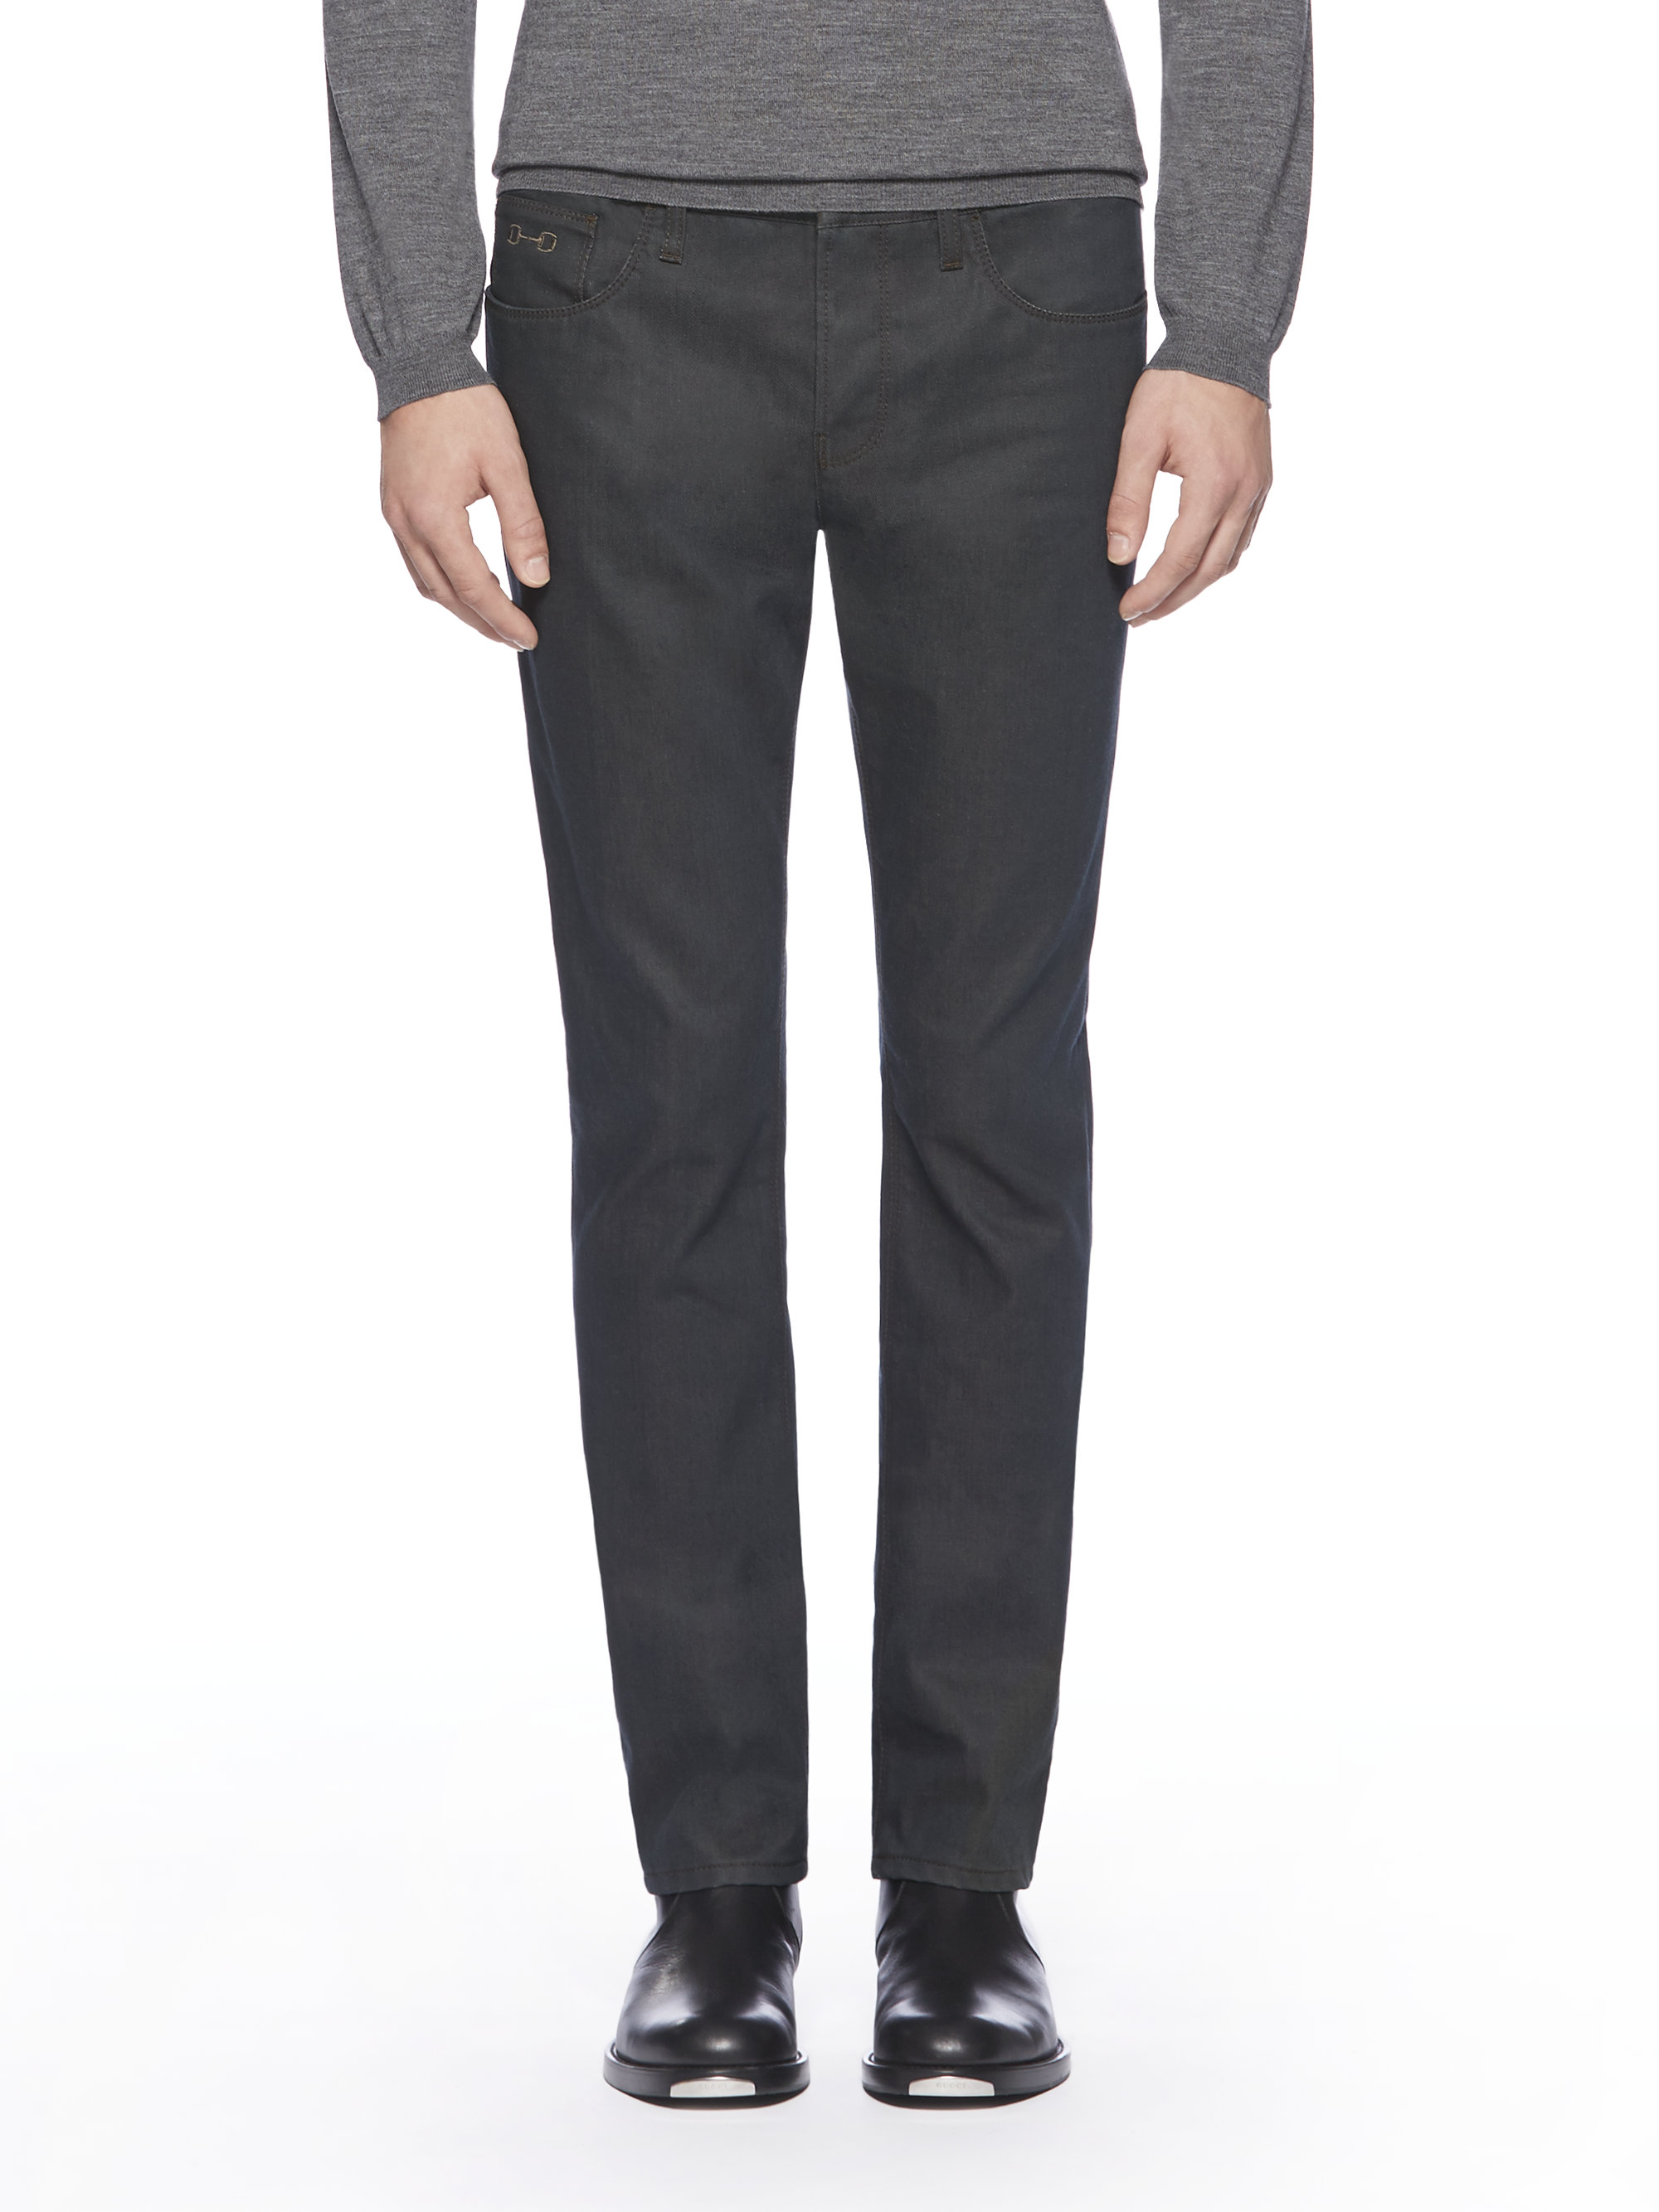 Lyst - Gucci Softened Denim Skinny Pants in Gray for Men